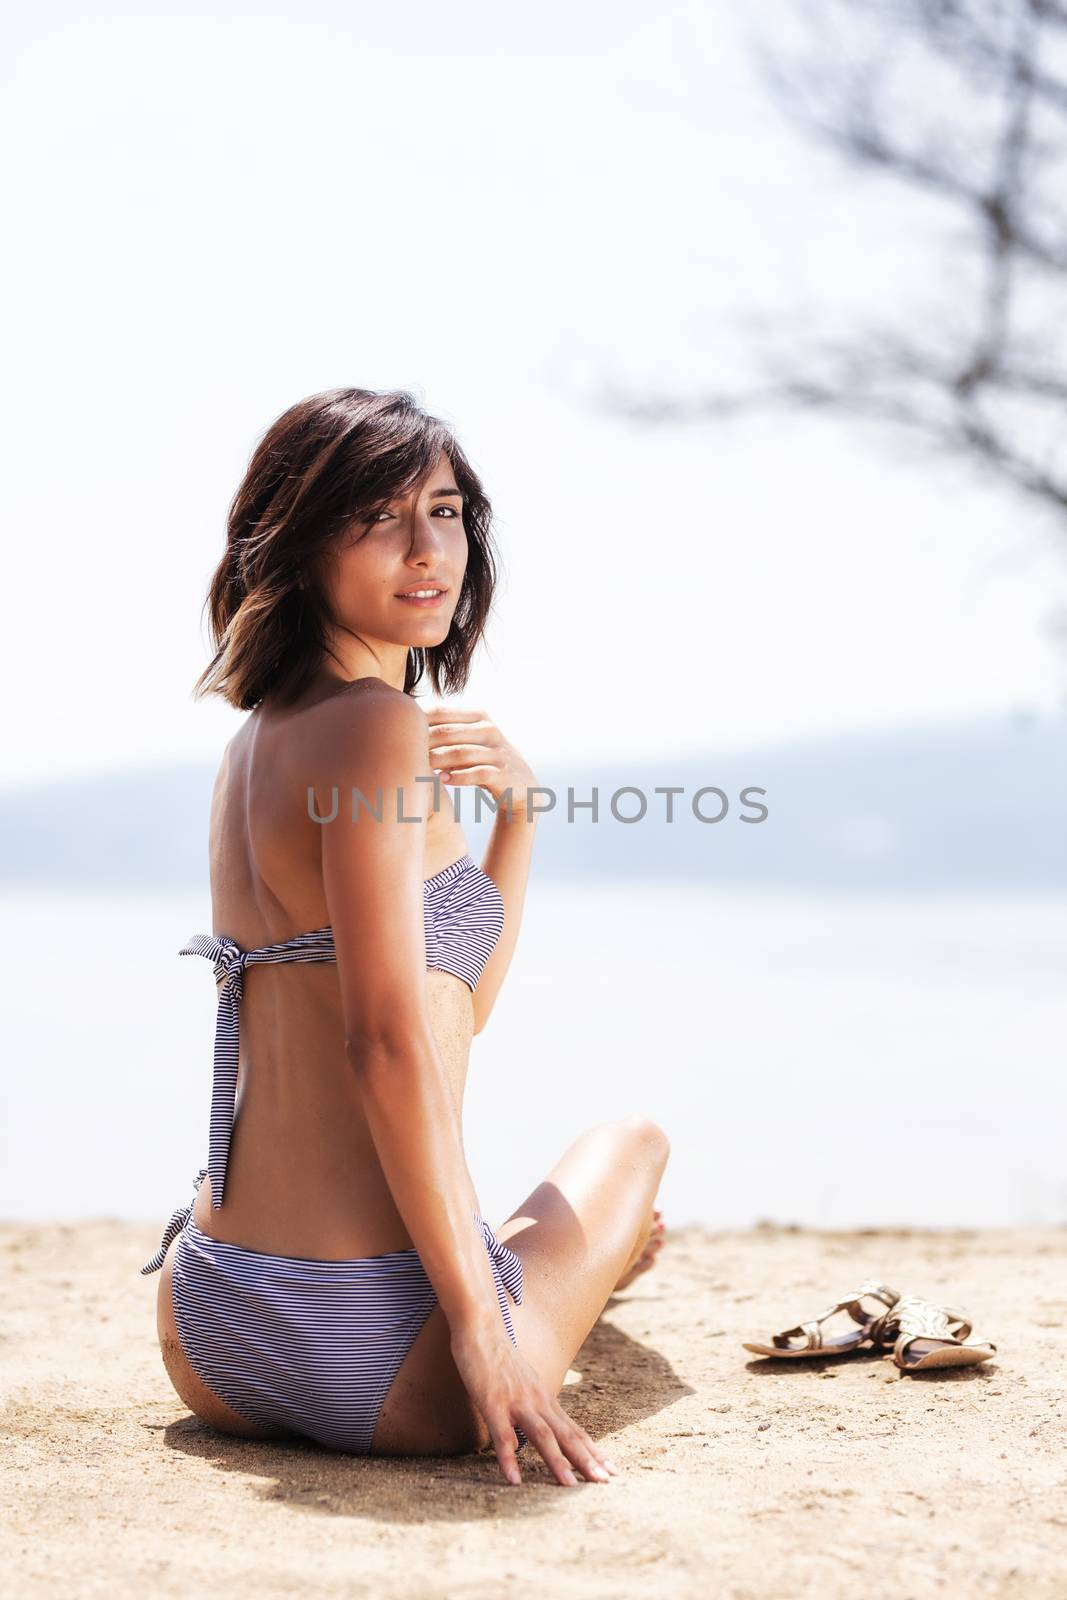 girl sunbathing on a beach by kokimk